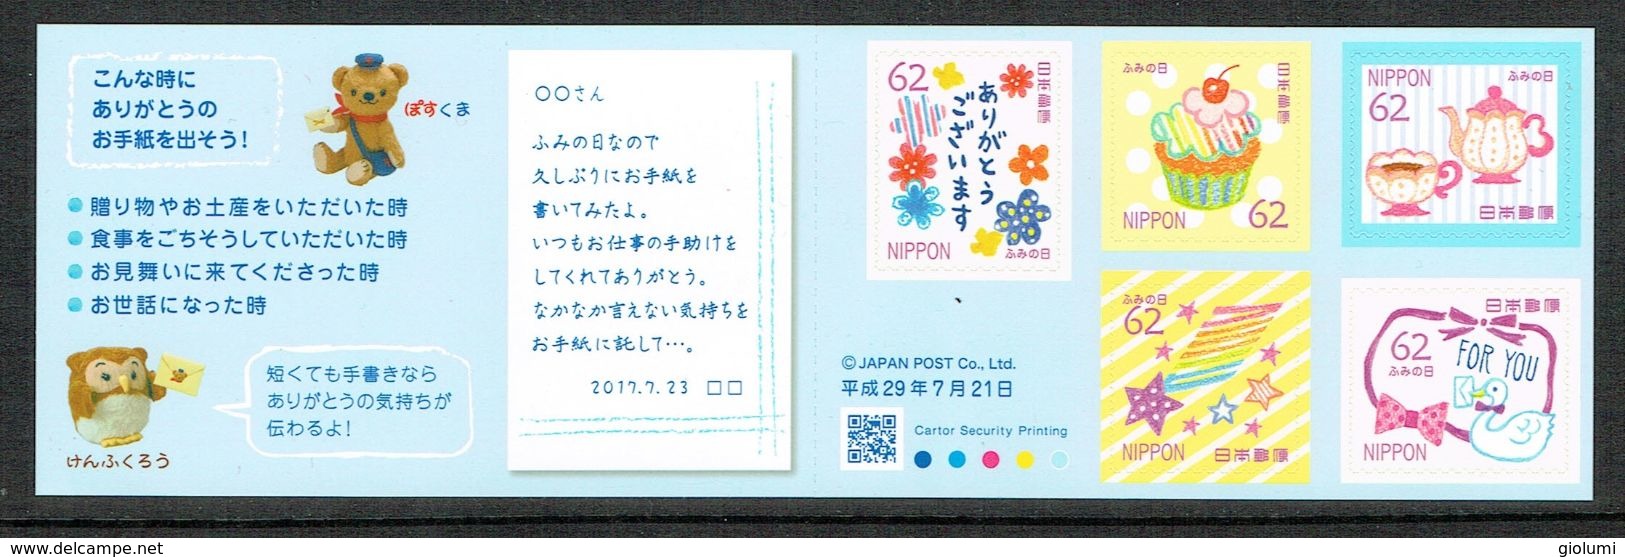 Japan 2017 Mint Booklet - Neufs